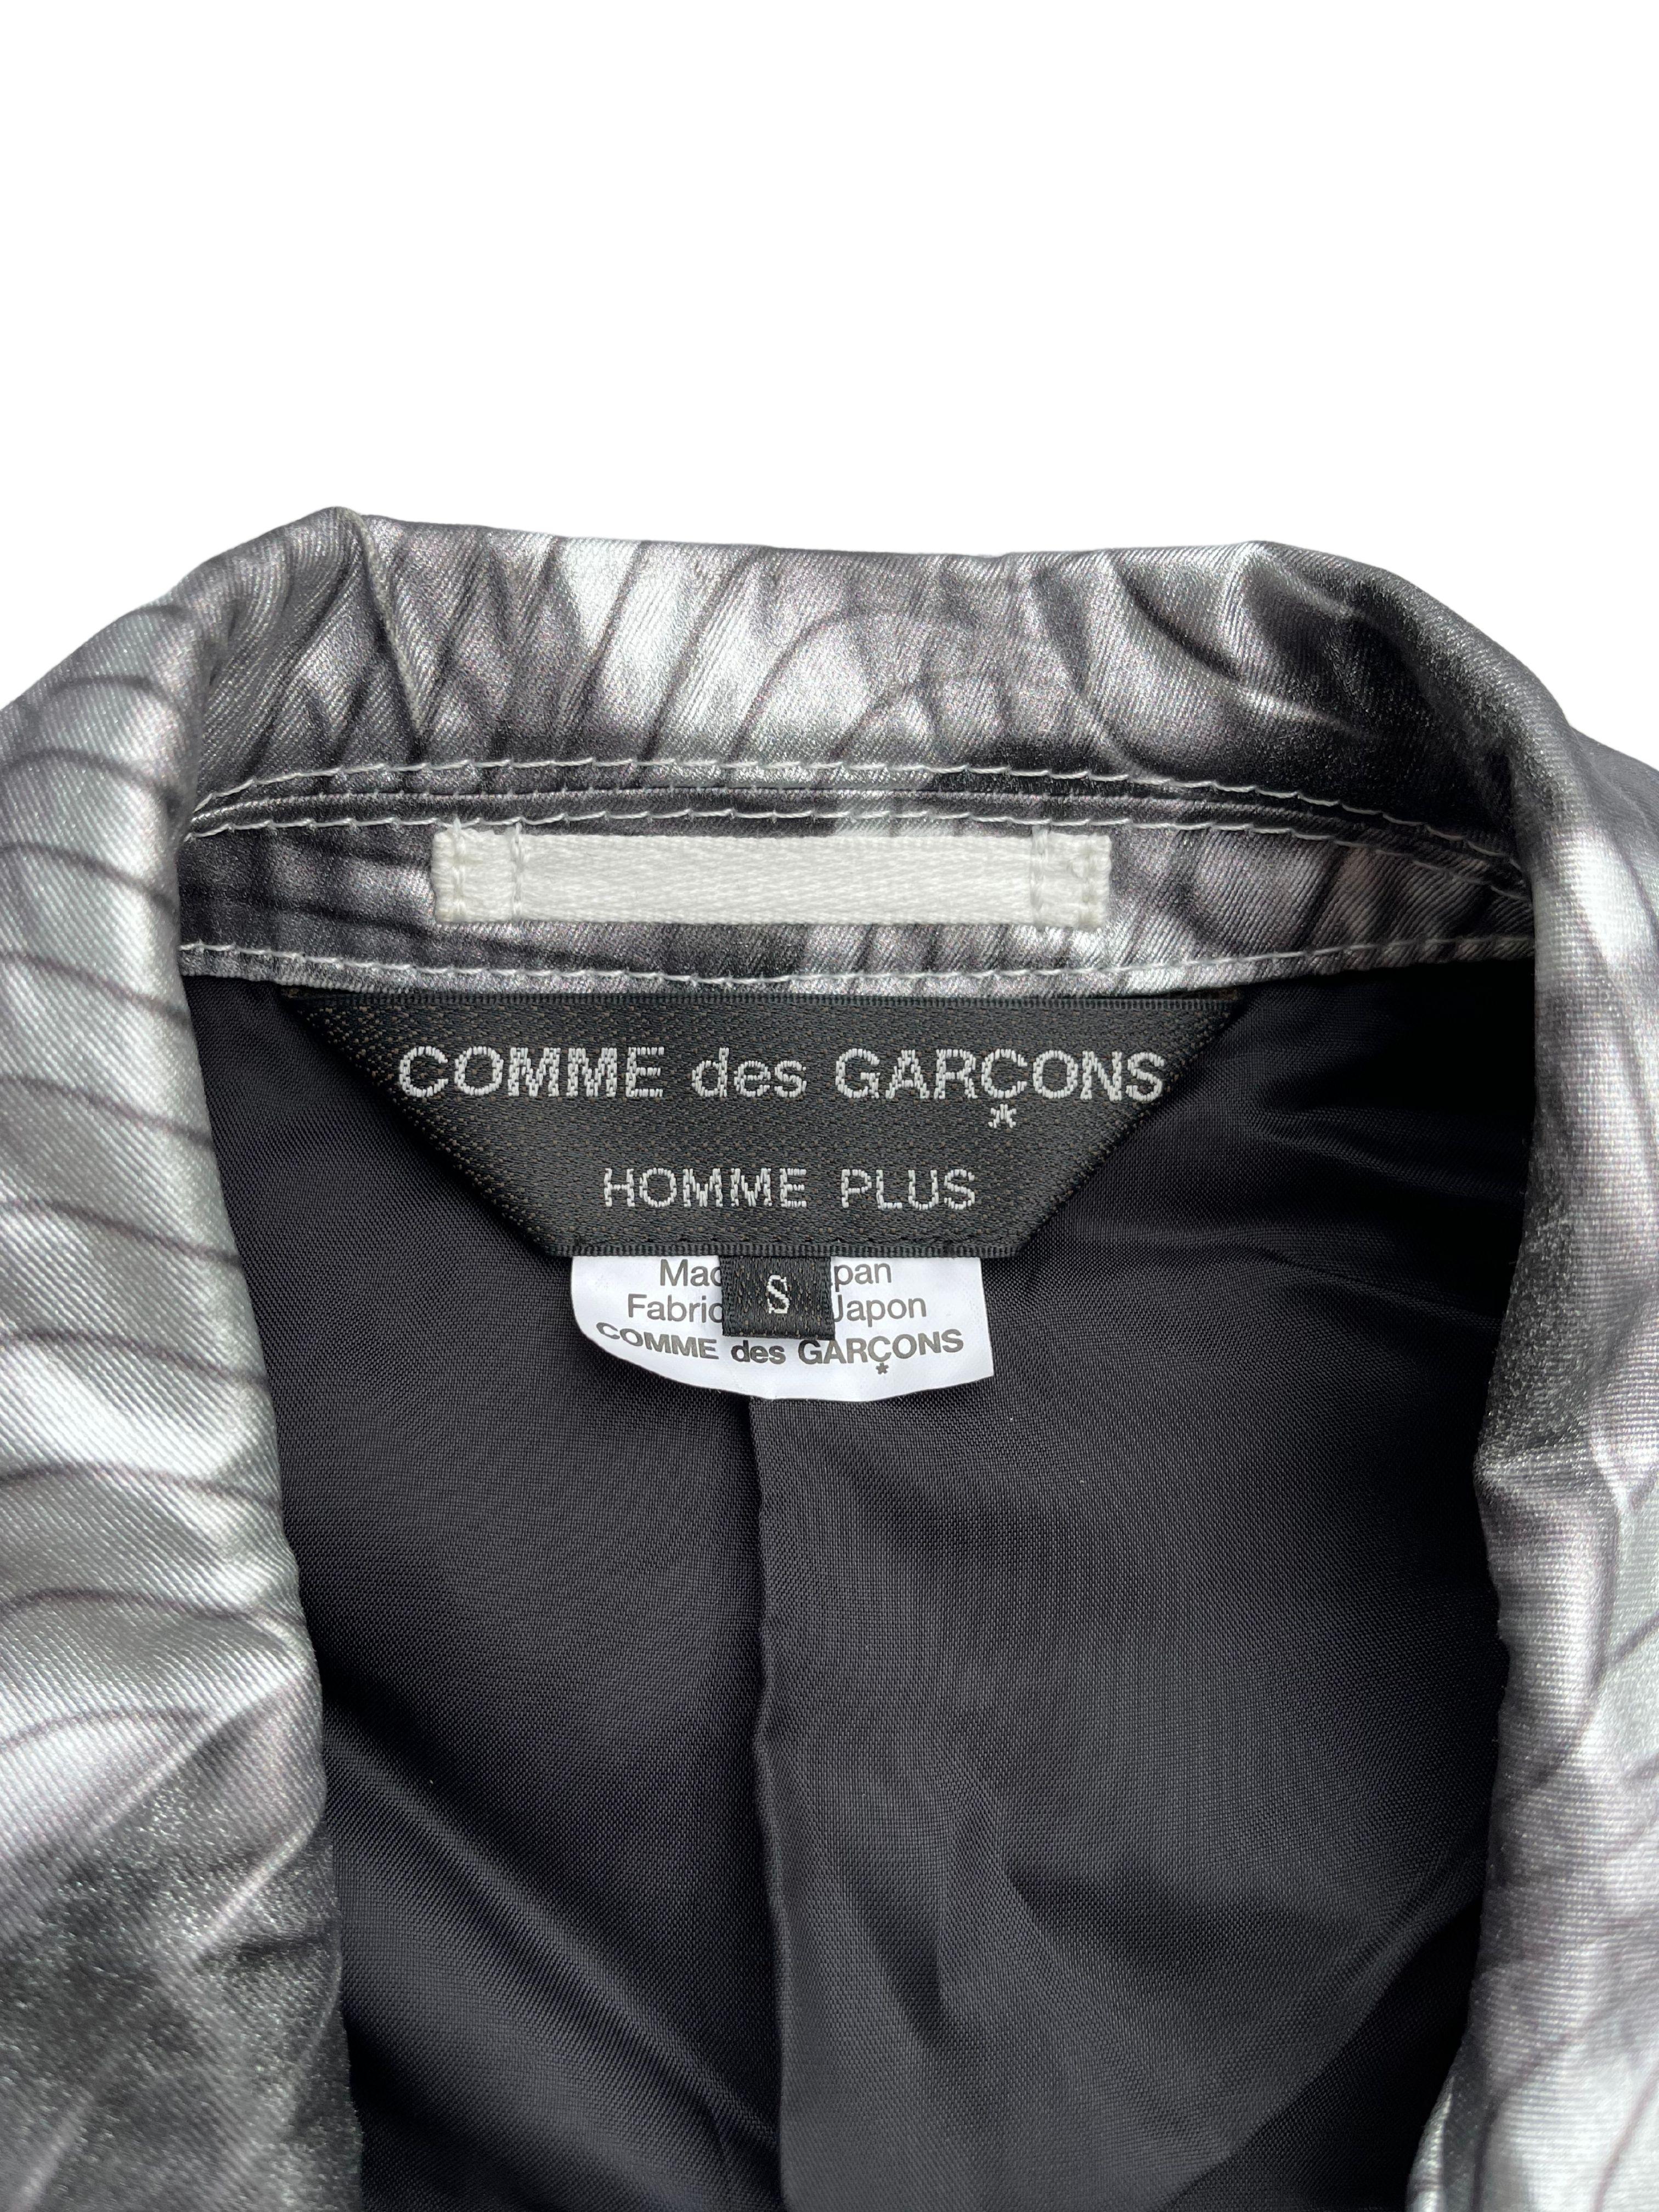 Comme Des Garcons Homme Plus Sheer Metal Riders Jacket, Spring Summer 2021 For Sale 20